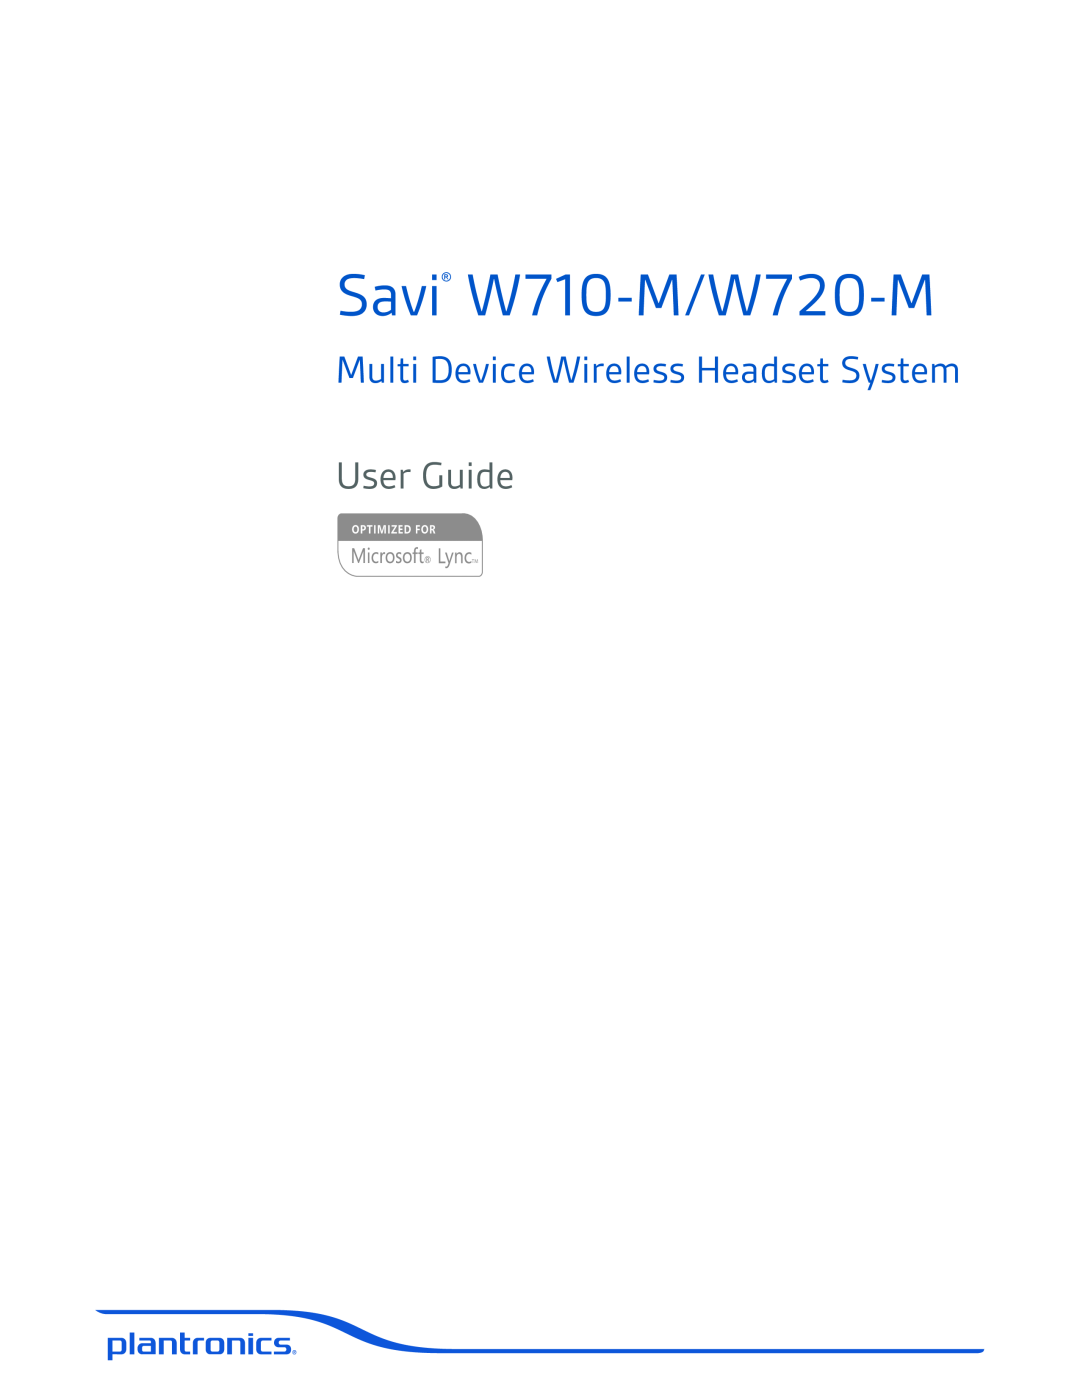 Plantronics manual Savi W710-M/W720-M, Multi Device Wireless Headset System, User Guide 